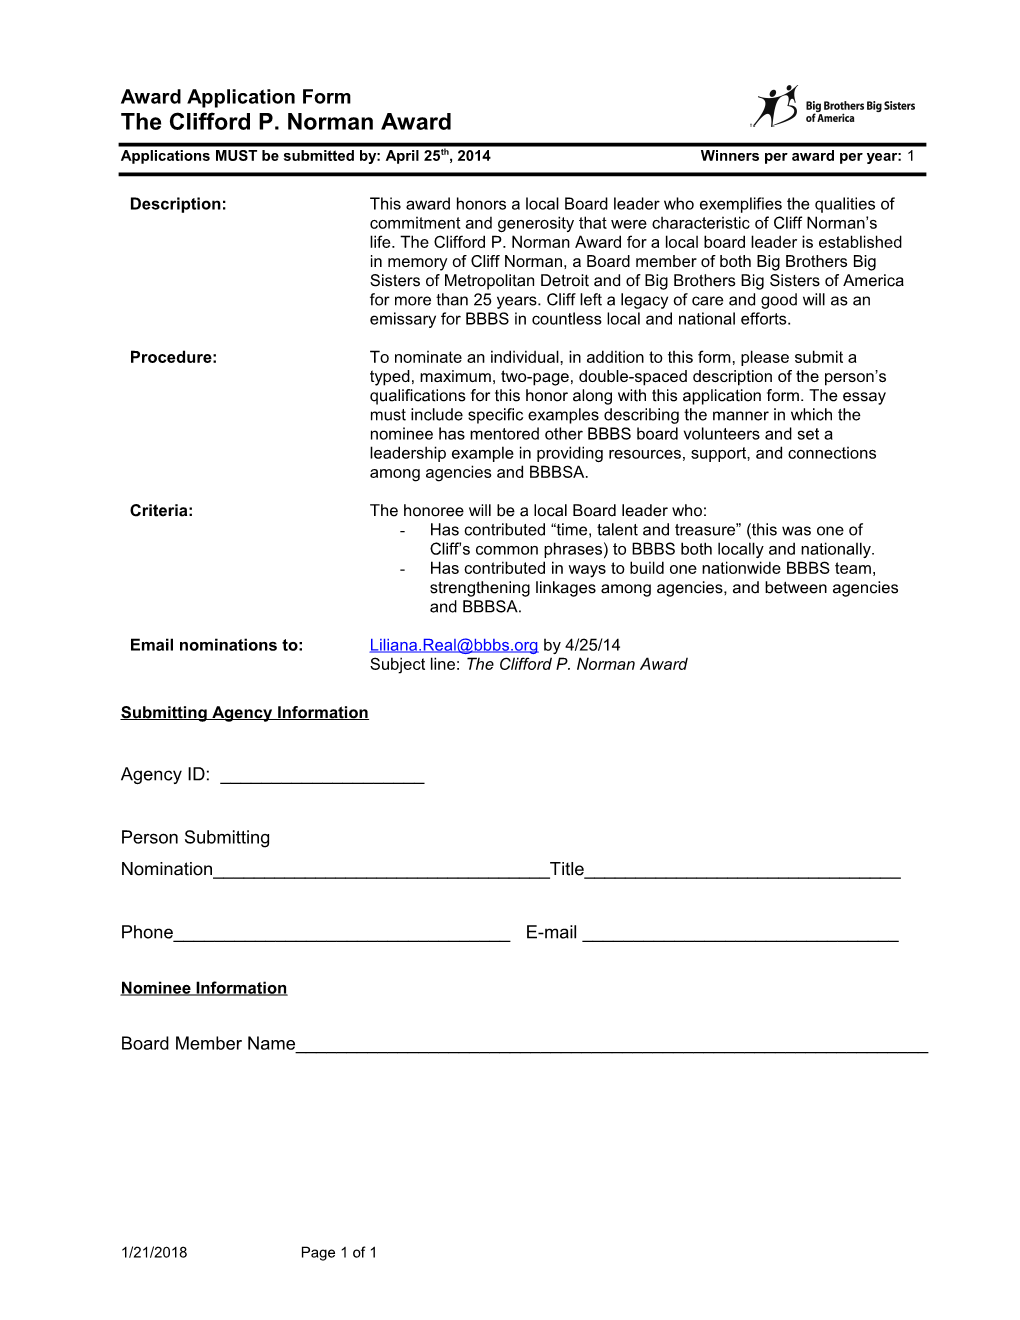 Award Application Form 2002